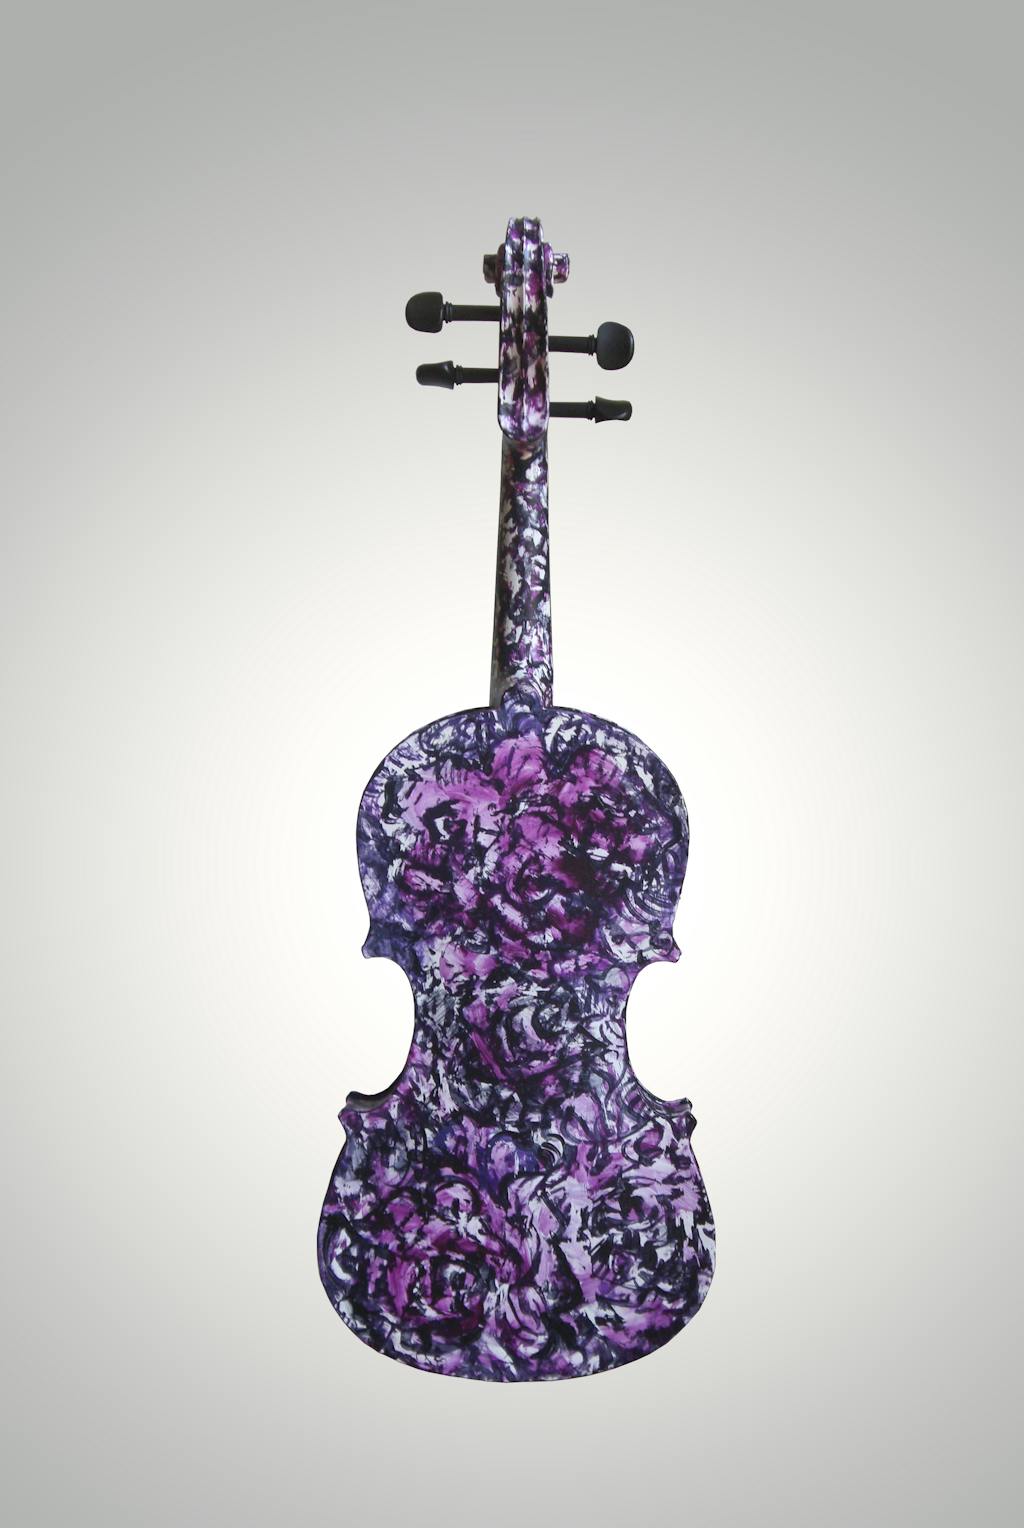 Violin "Magdalene's rose", painted by Elena Birkenwald in 2009